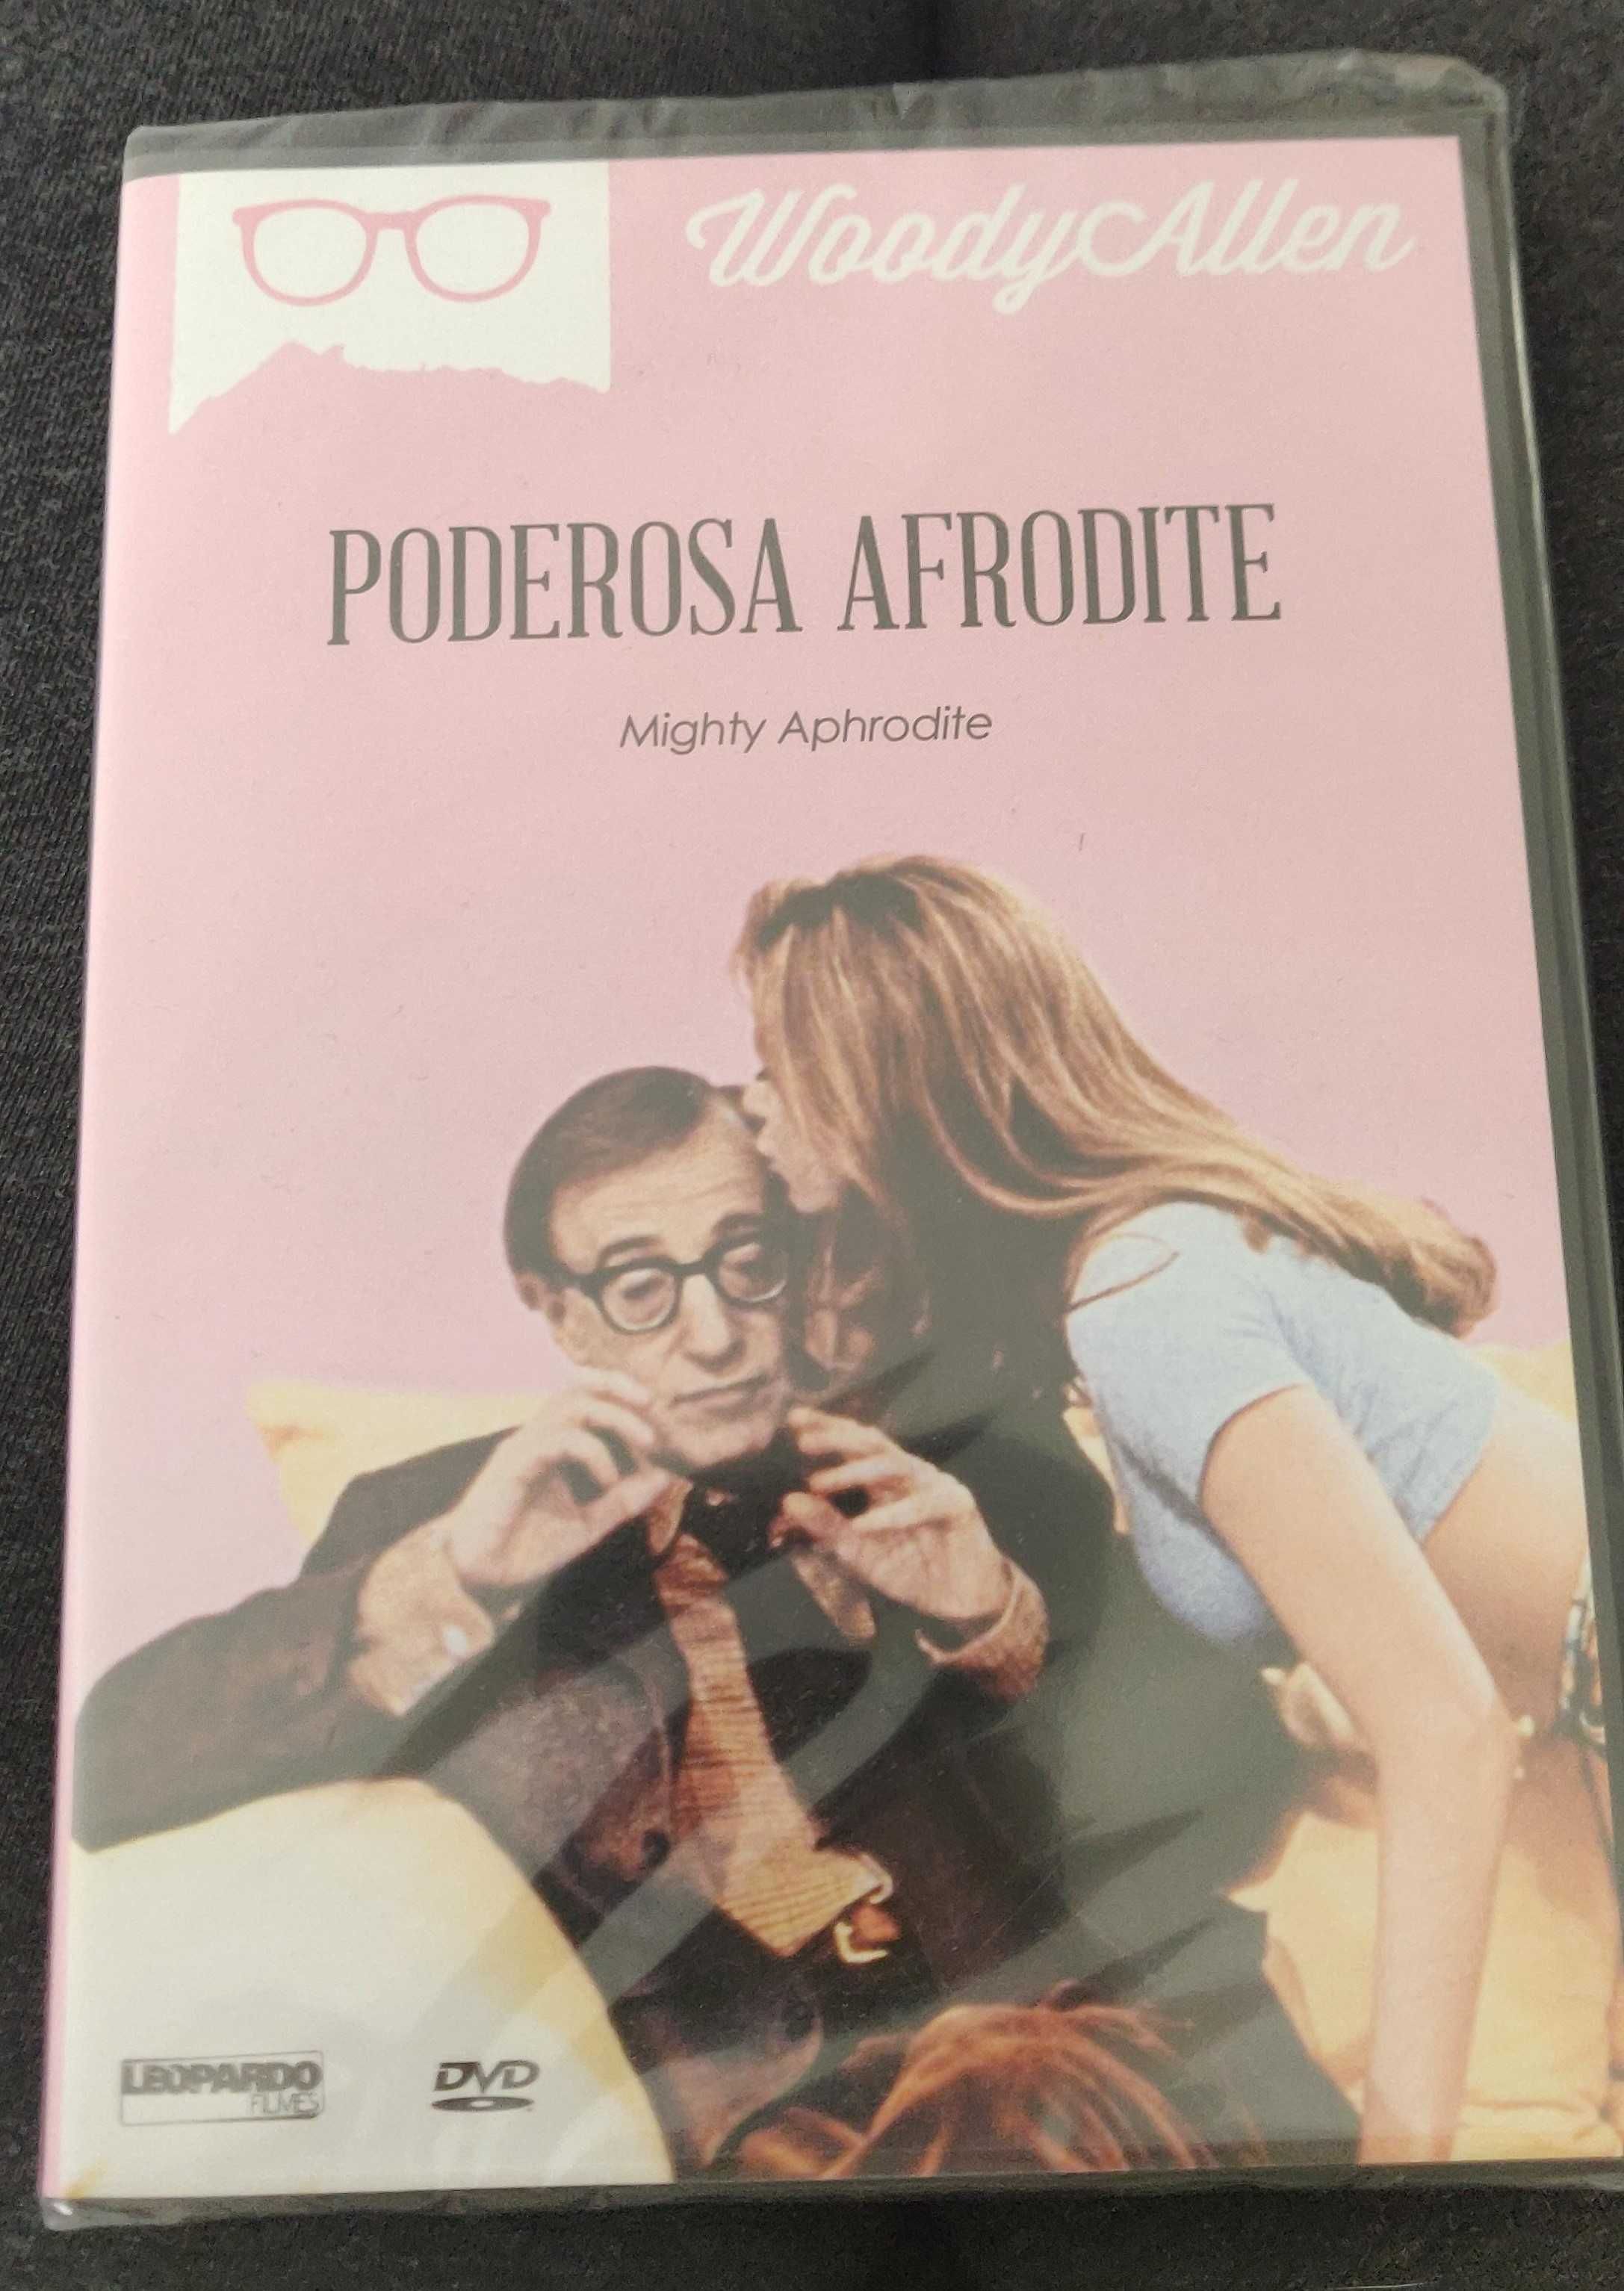 Dvd "Poderosa Afrodite" de Woody Allen, Novo